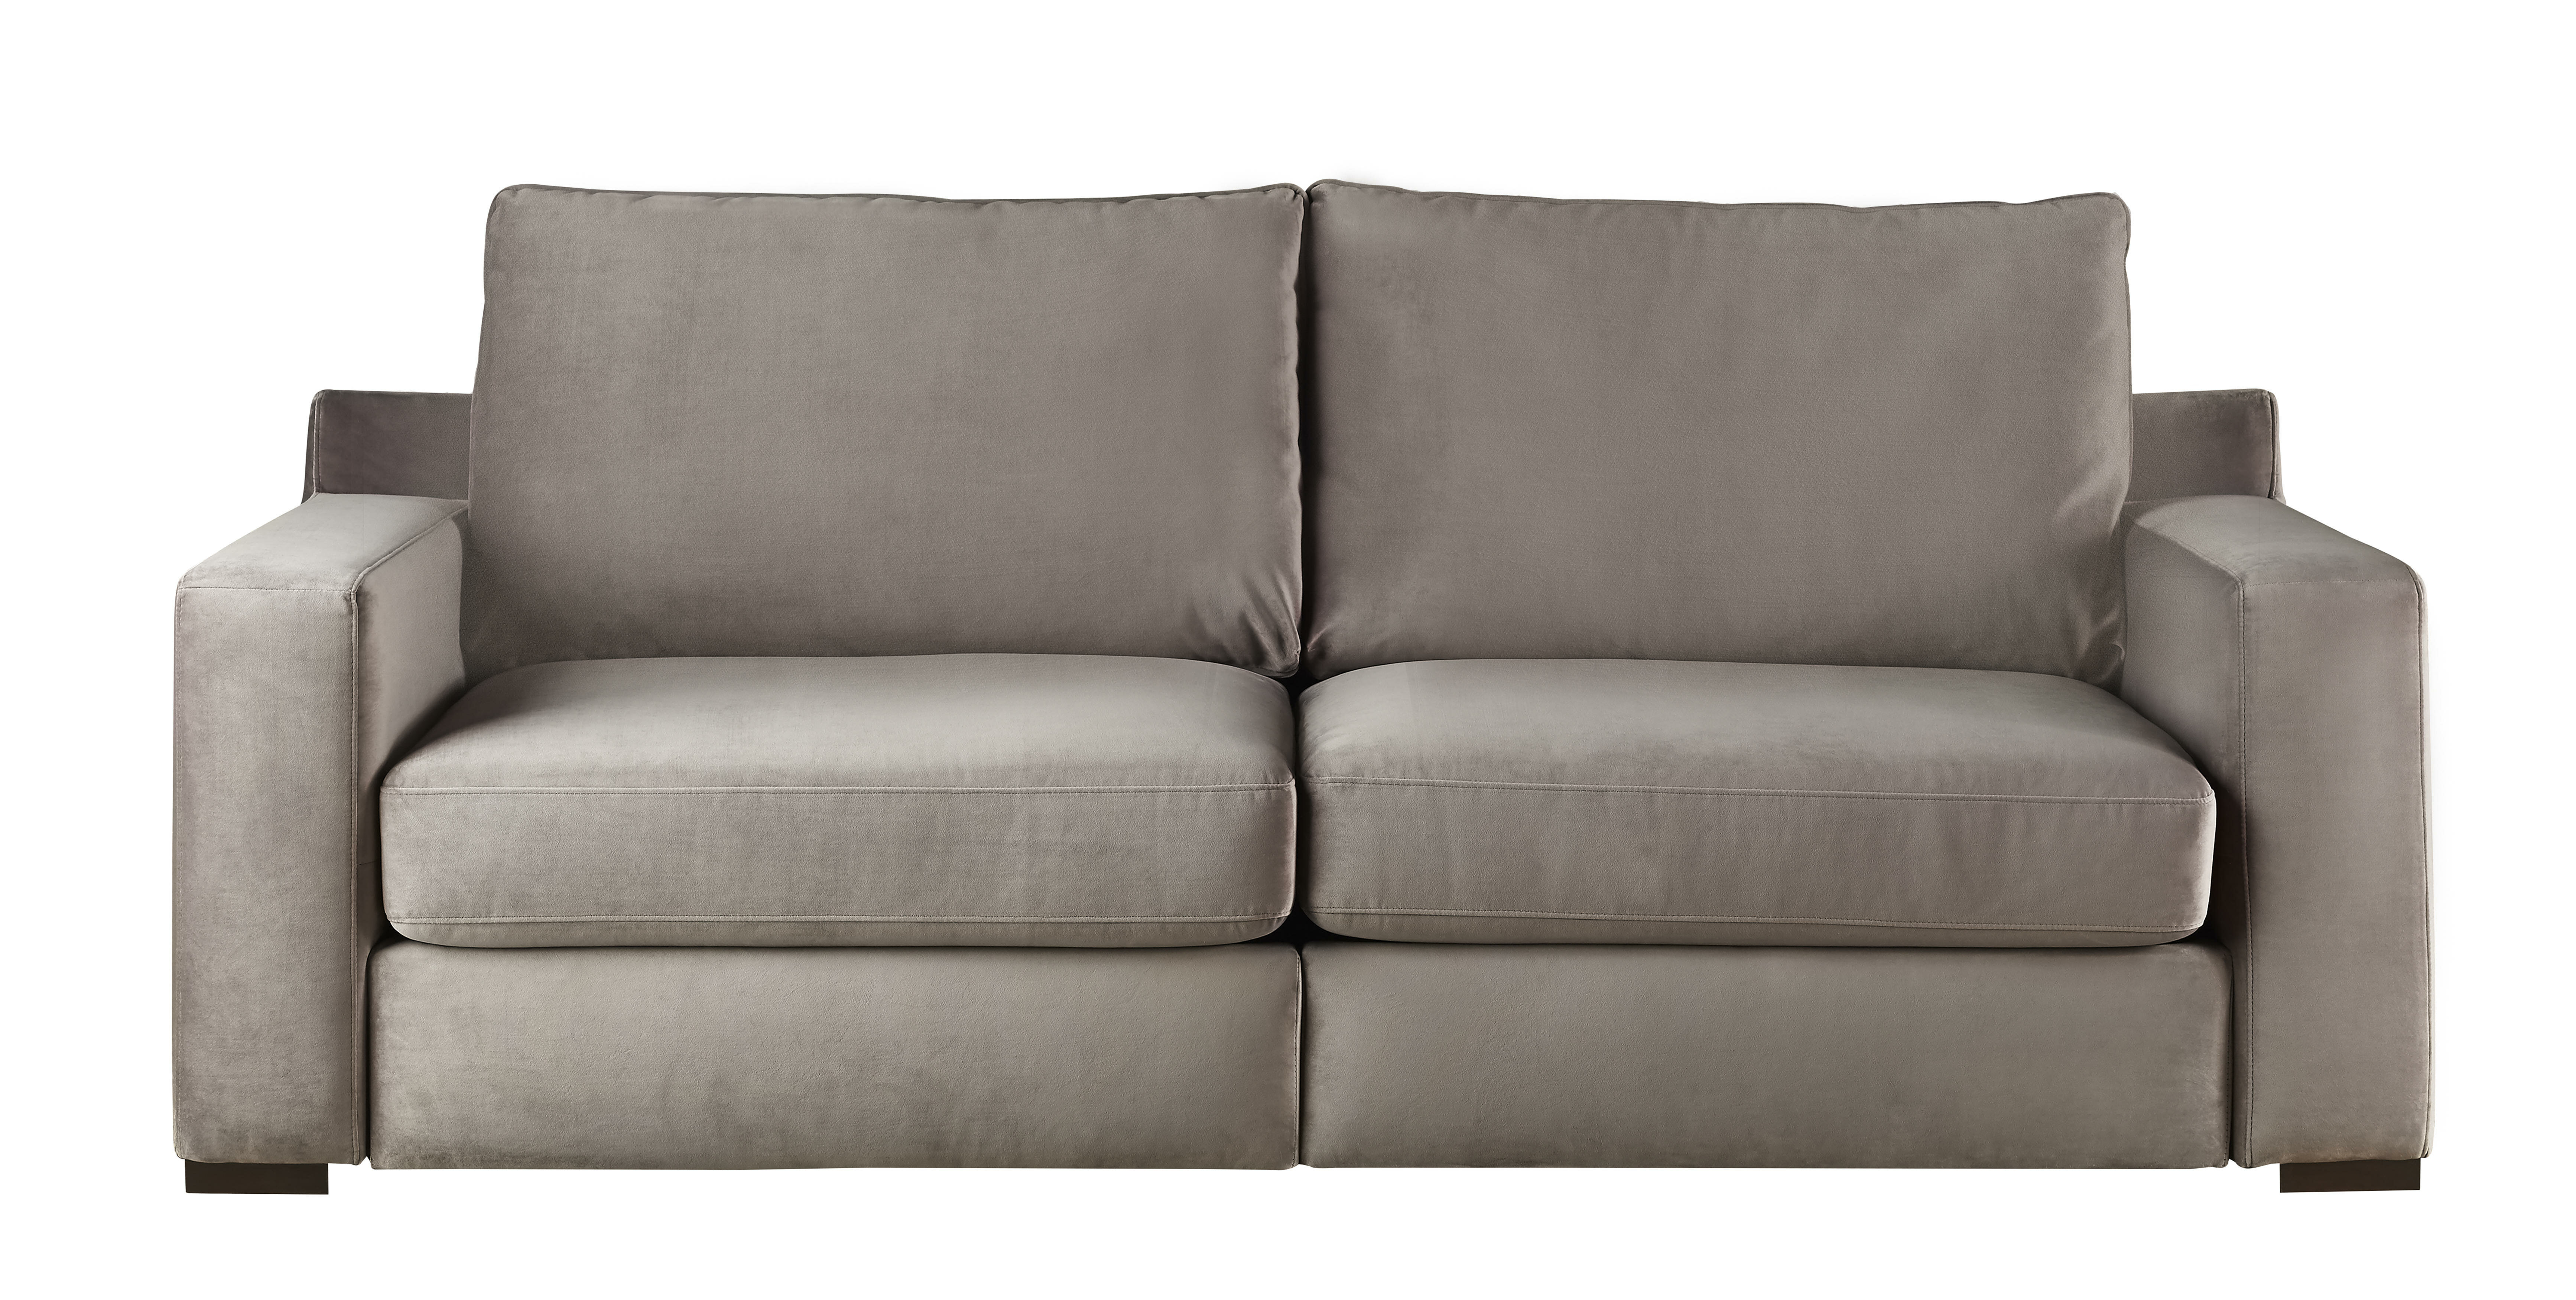 modern low profile sofa bed